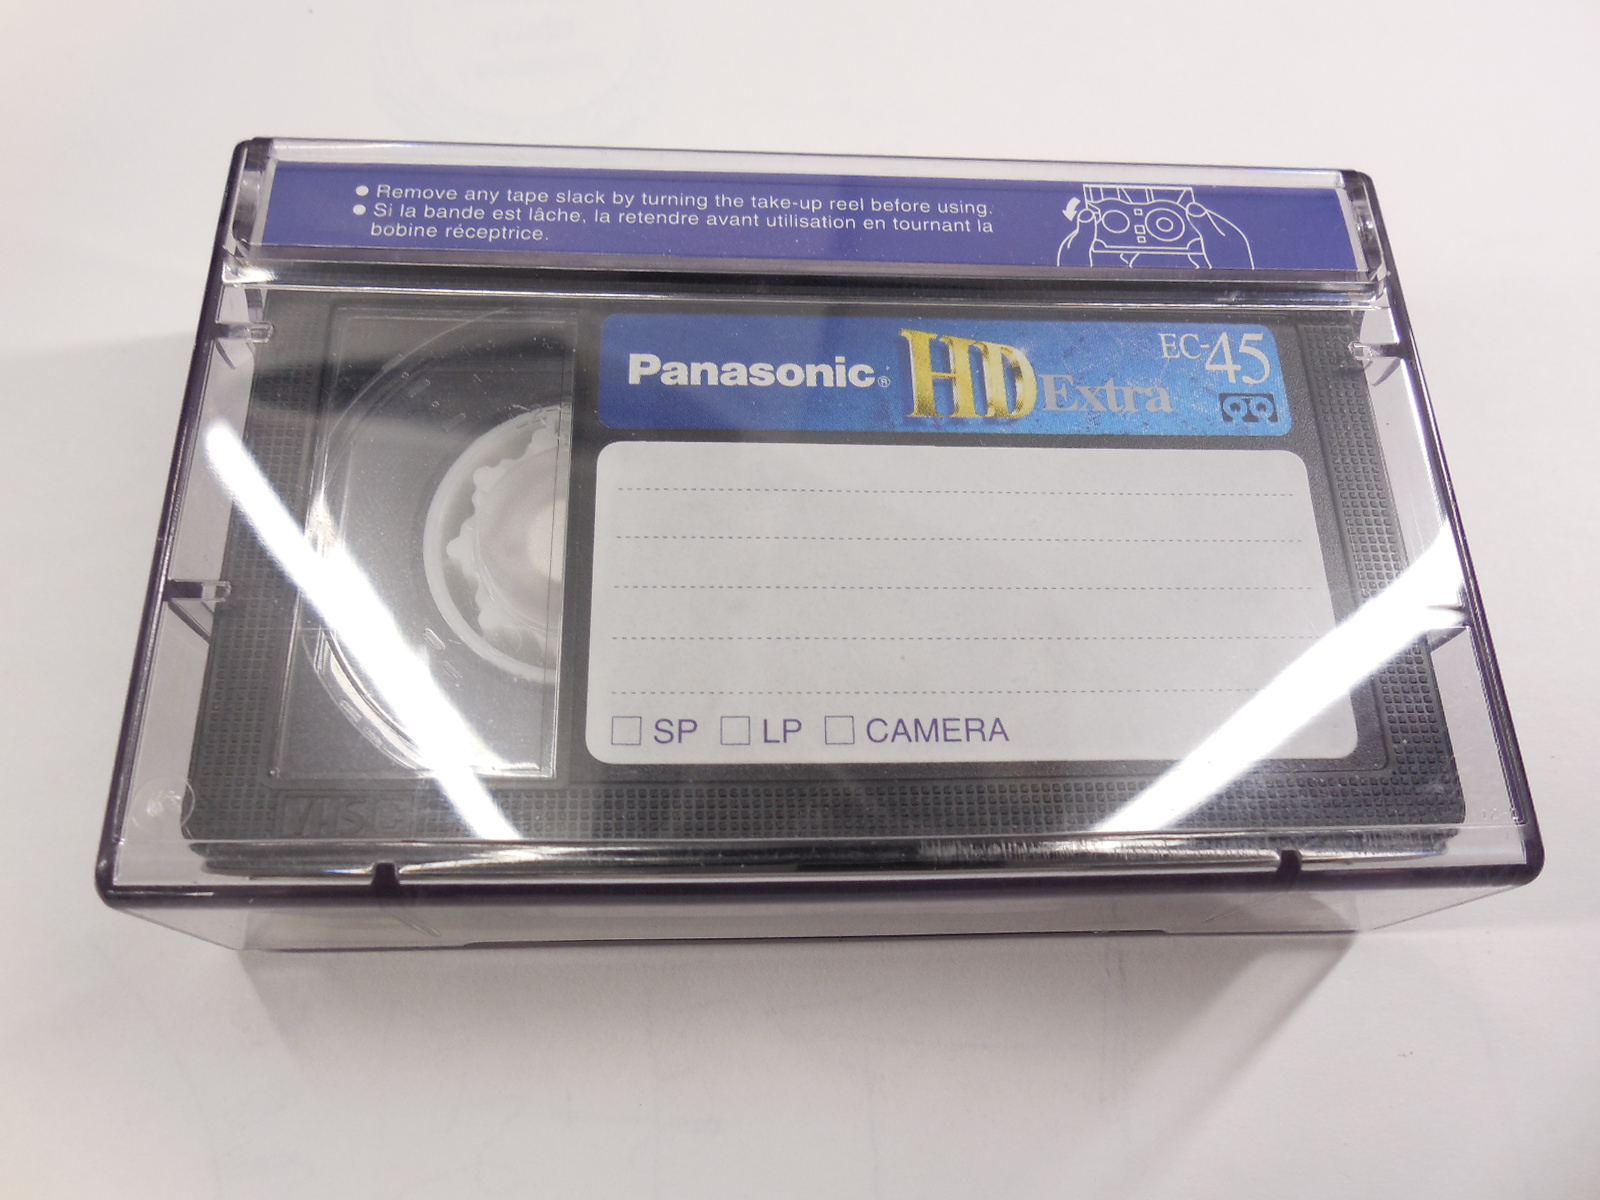 Кассета панасоник. Кассета Panasonic EC-45. Panasonic VHS-C кассета. Видеокассета VHS-C Panasonic HD Extra (EC-45). Видеокассета ec45.